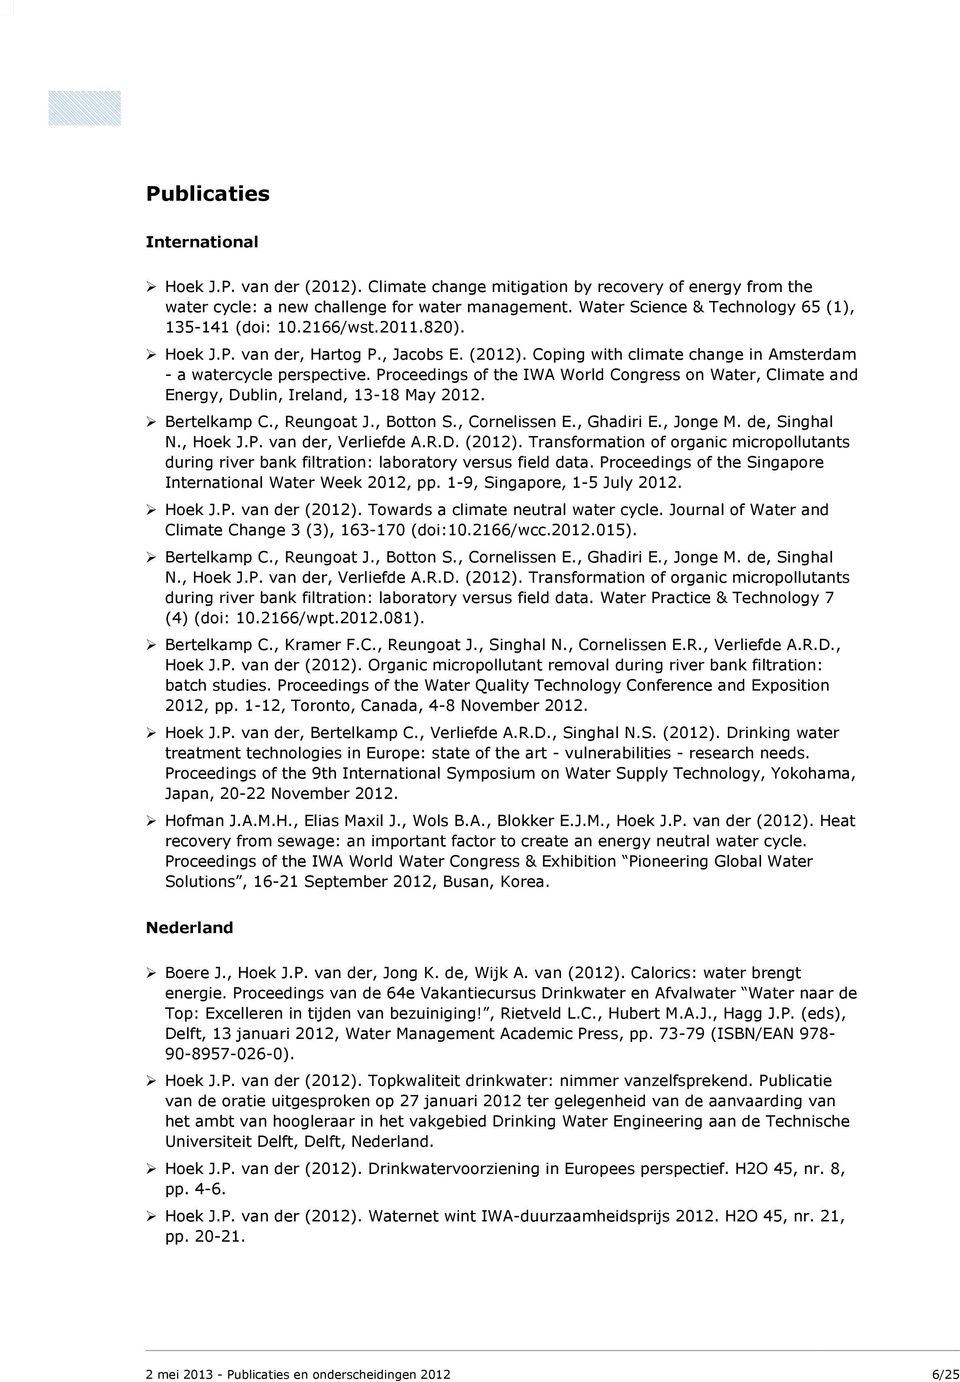 Proceedings of the IWA World Congress on Water, Climate and Energy, Dublin, Ireland, 13-18 May 2012. Bertelkamp C., Reungoat J., Botton S., Cornelissen E., Ghadiri E., Jonge M. de, Singhal N., Hoek J.